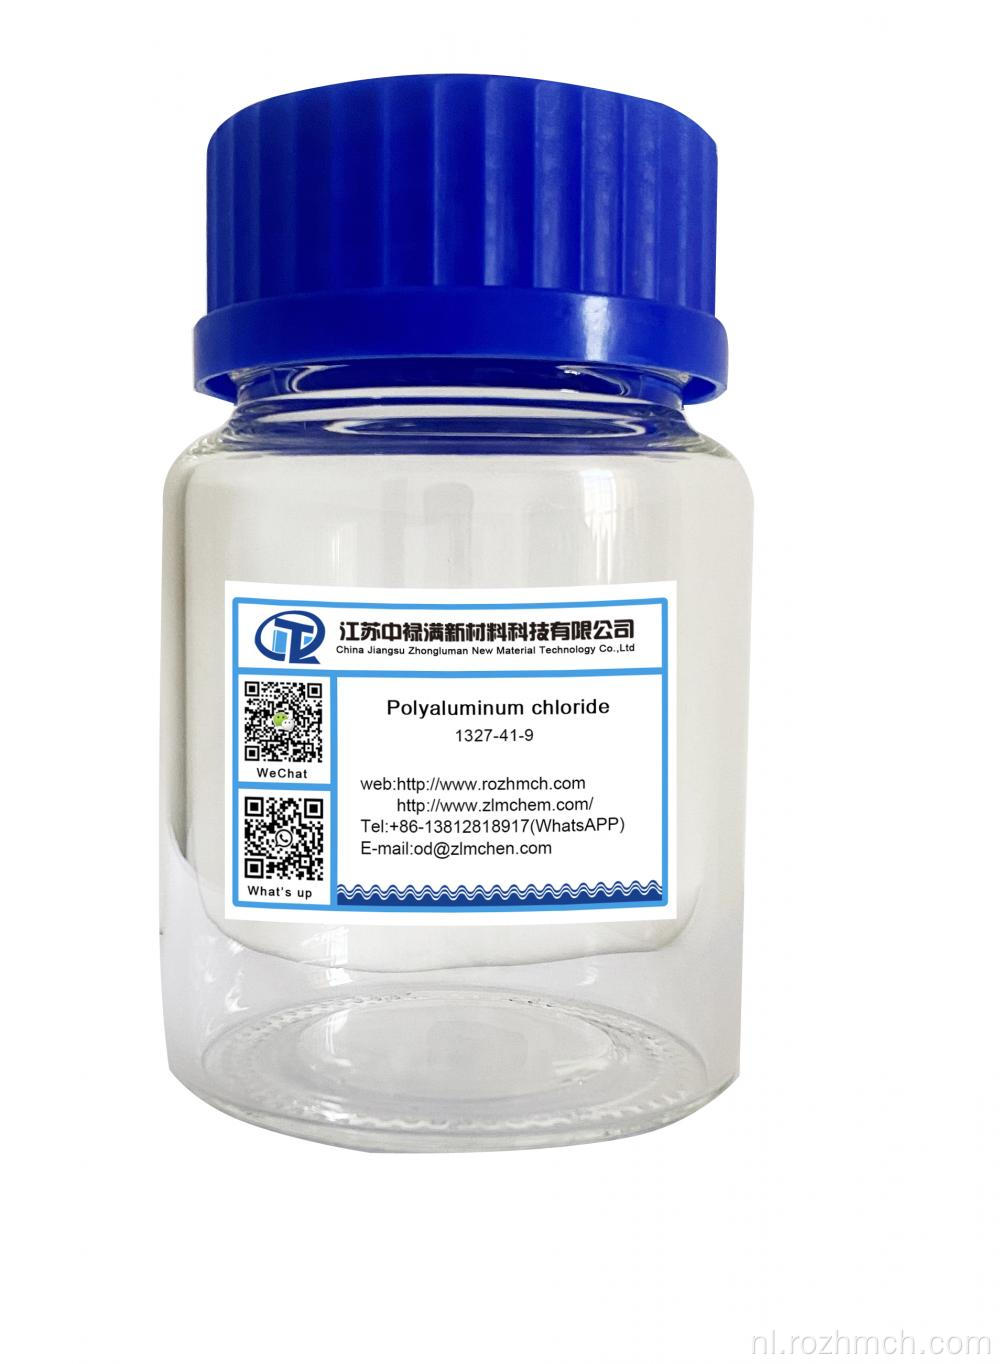 Polyaluminum chloride CAS nr. 1327-41-9